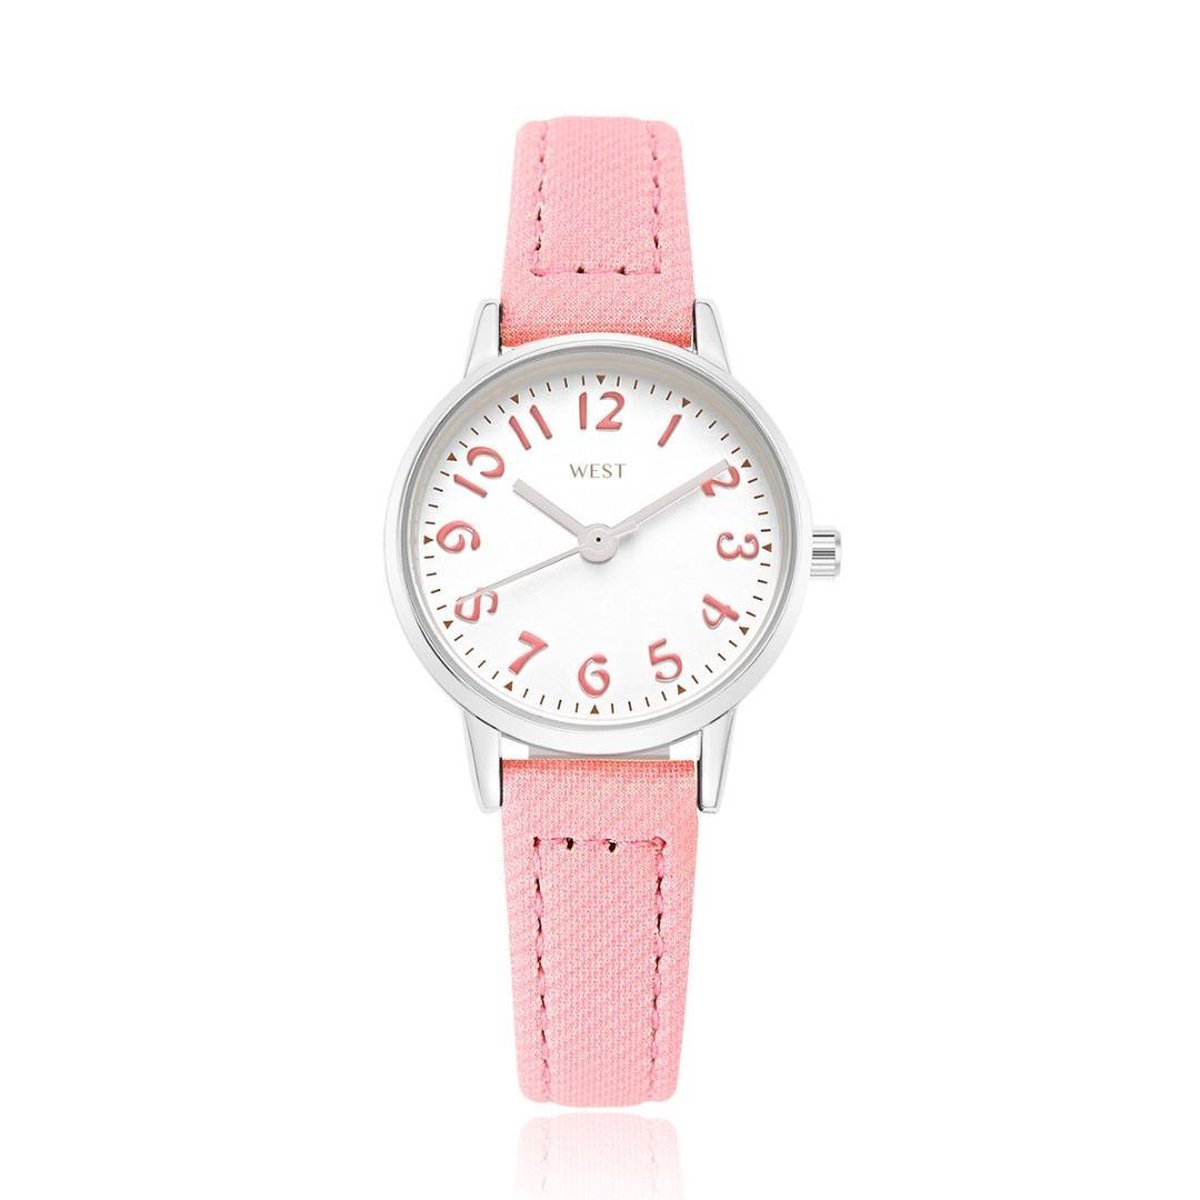 West Watch - model Rose - analoog kinder- tiener horloge - Ø 23 mm - roze-zilver